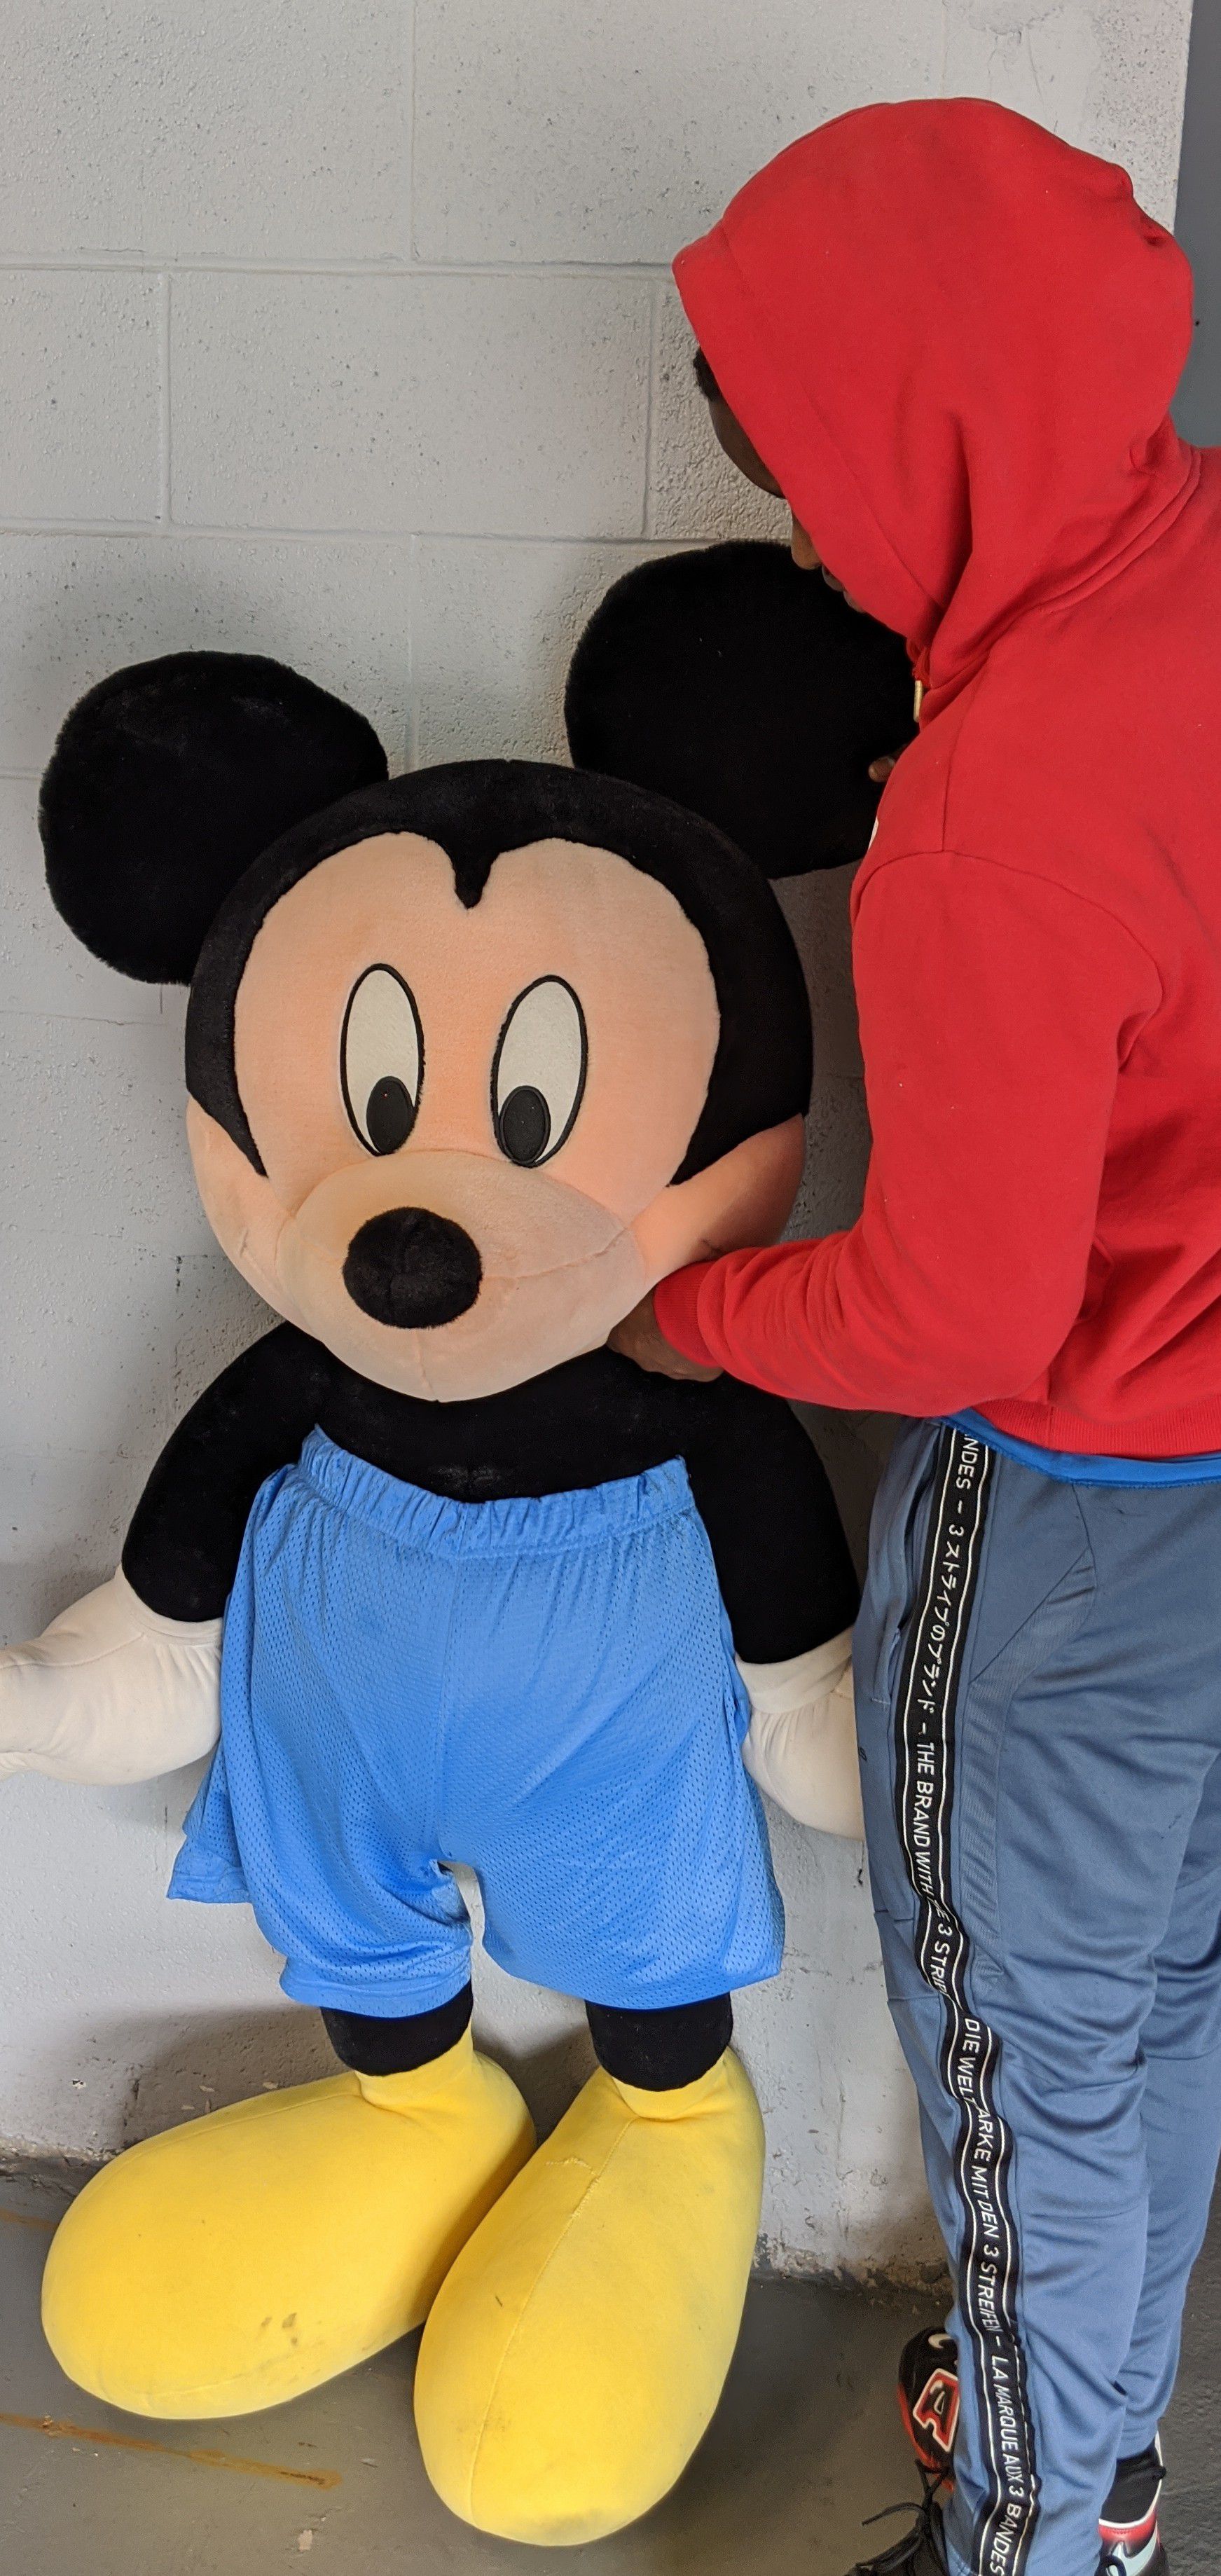 Huge large big jumbo oversized Mickey mouse plush stuffed animal